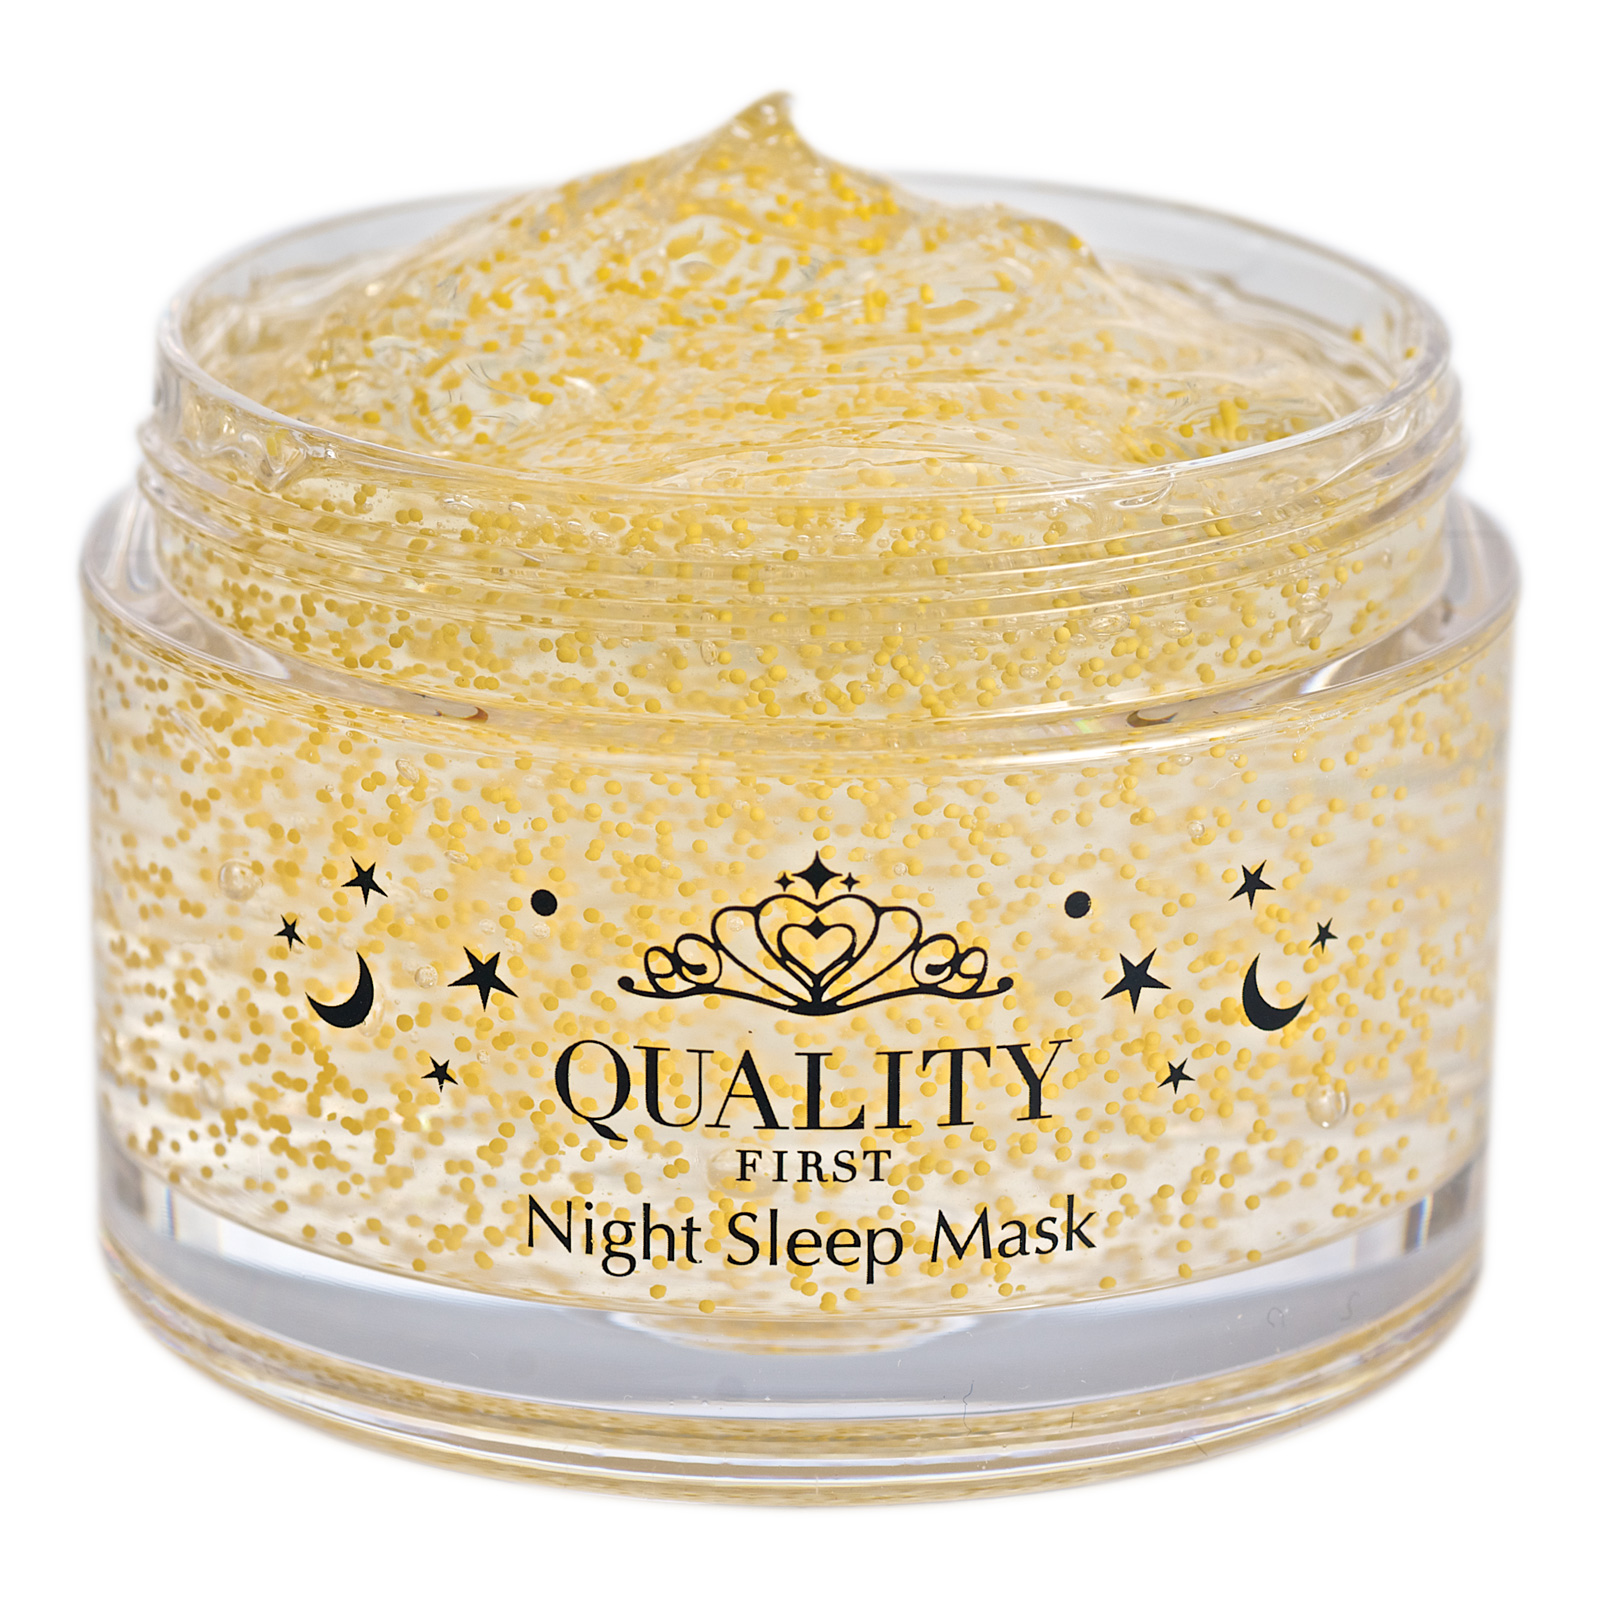 Quality First Queen’s Premium Night Sleep Mask. Антивозрастная ночная маска для лица Кволити Фест, 80 г